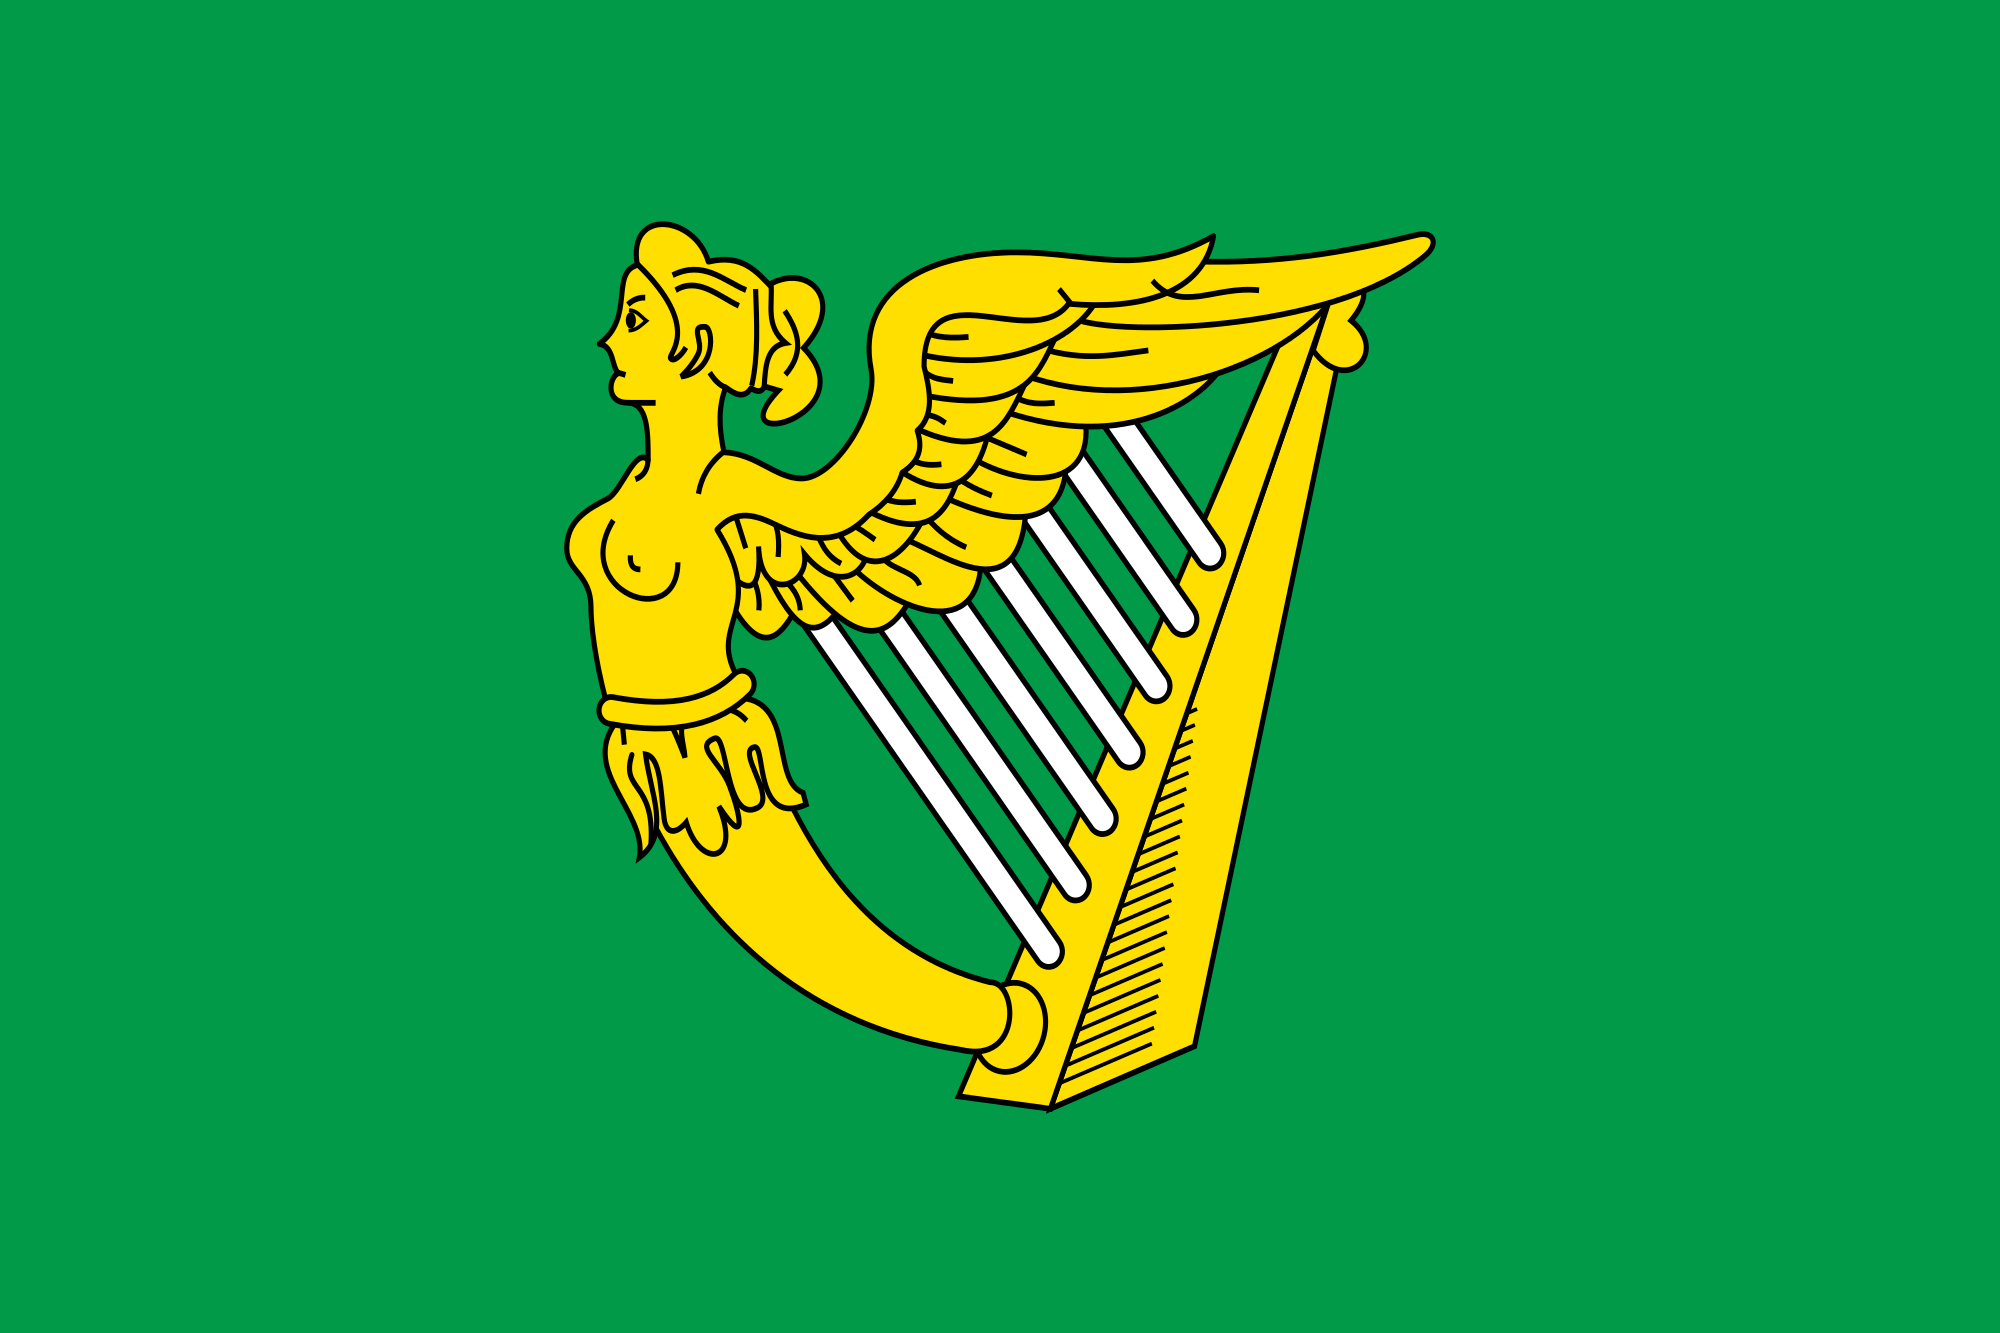 Flag of Ireland - Wikipedia